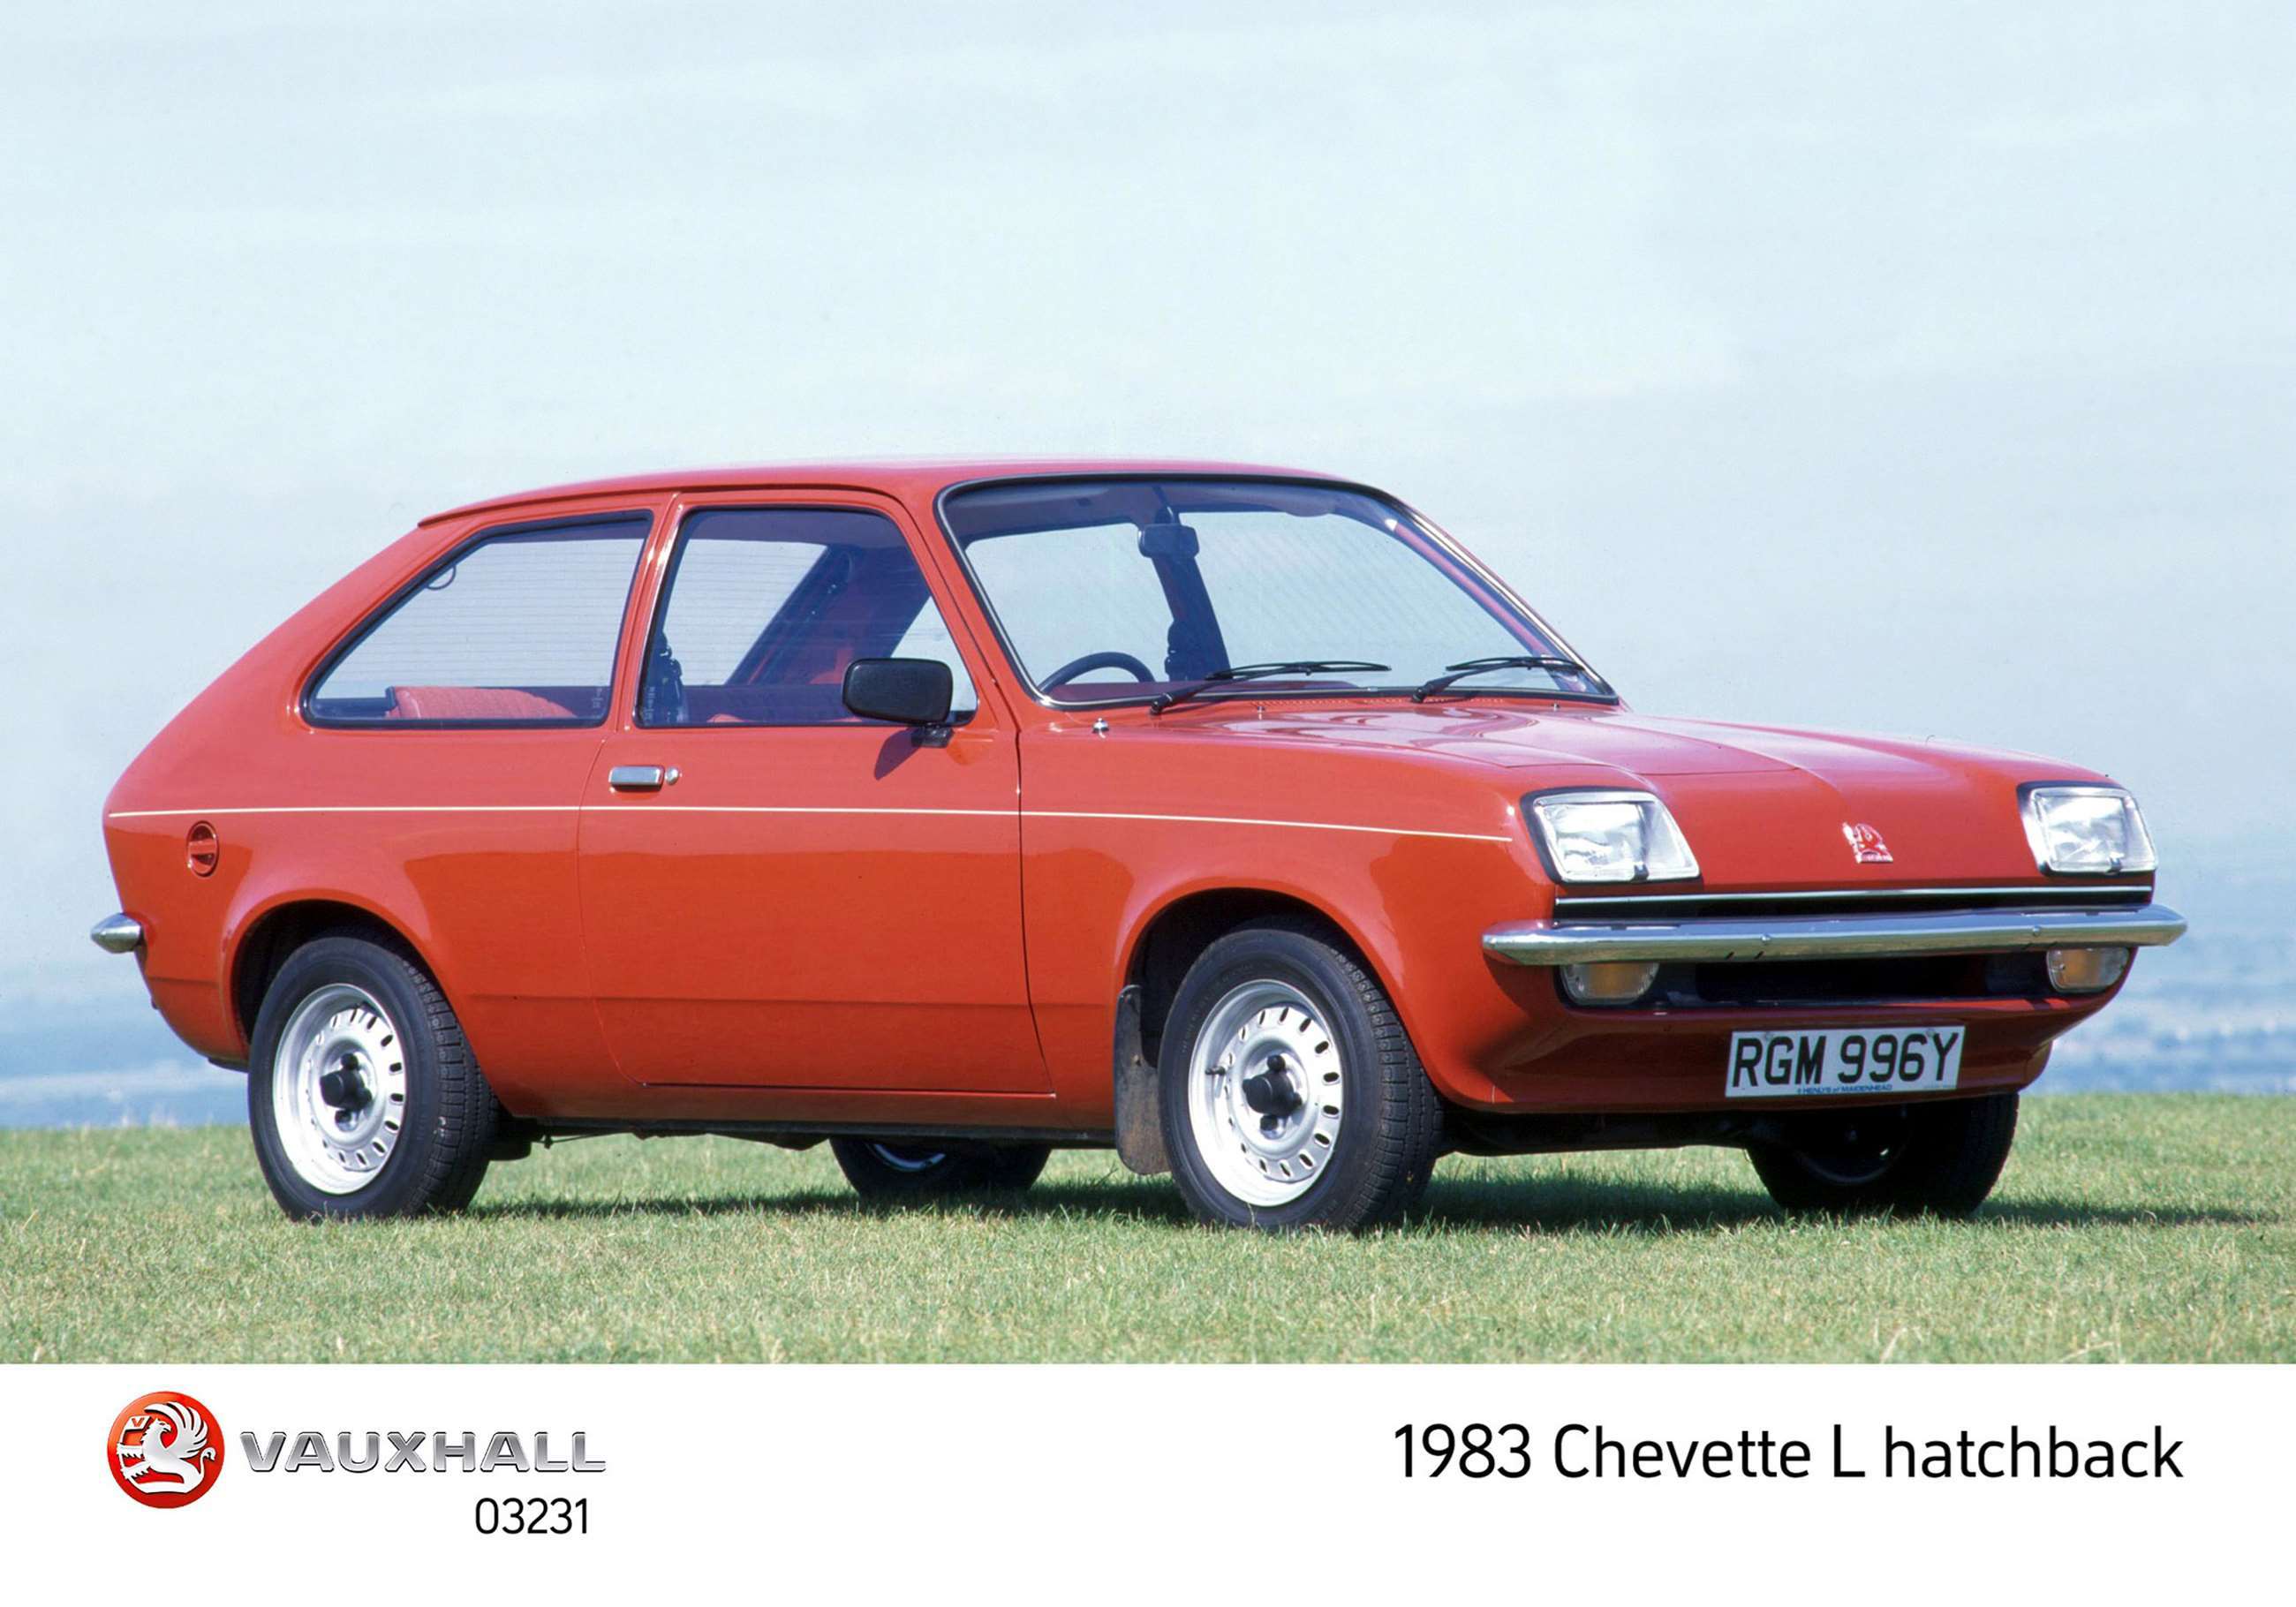 vauxhall-chevette-l-hatchback-1983-goodwood-30082019.jpg